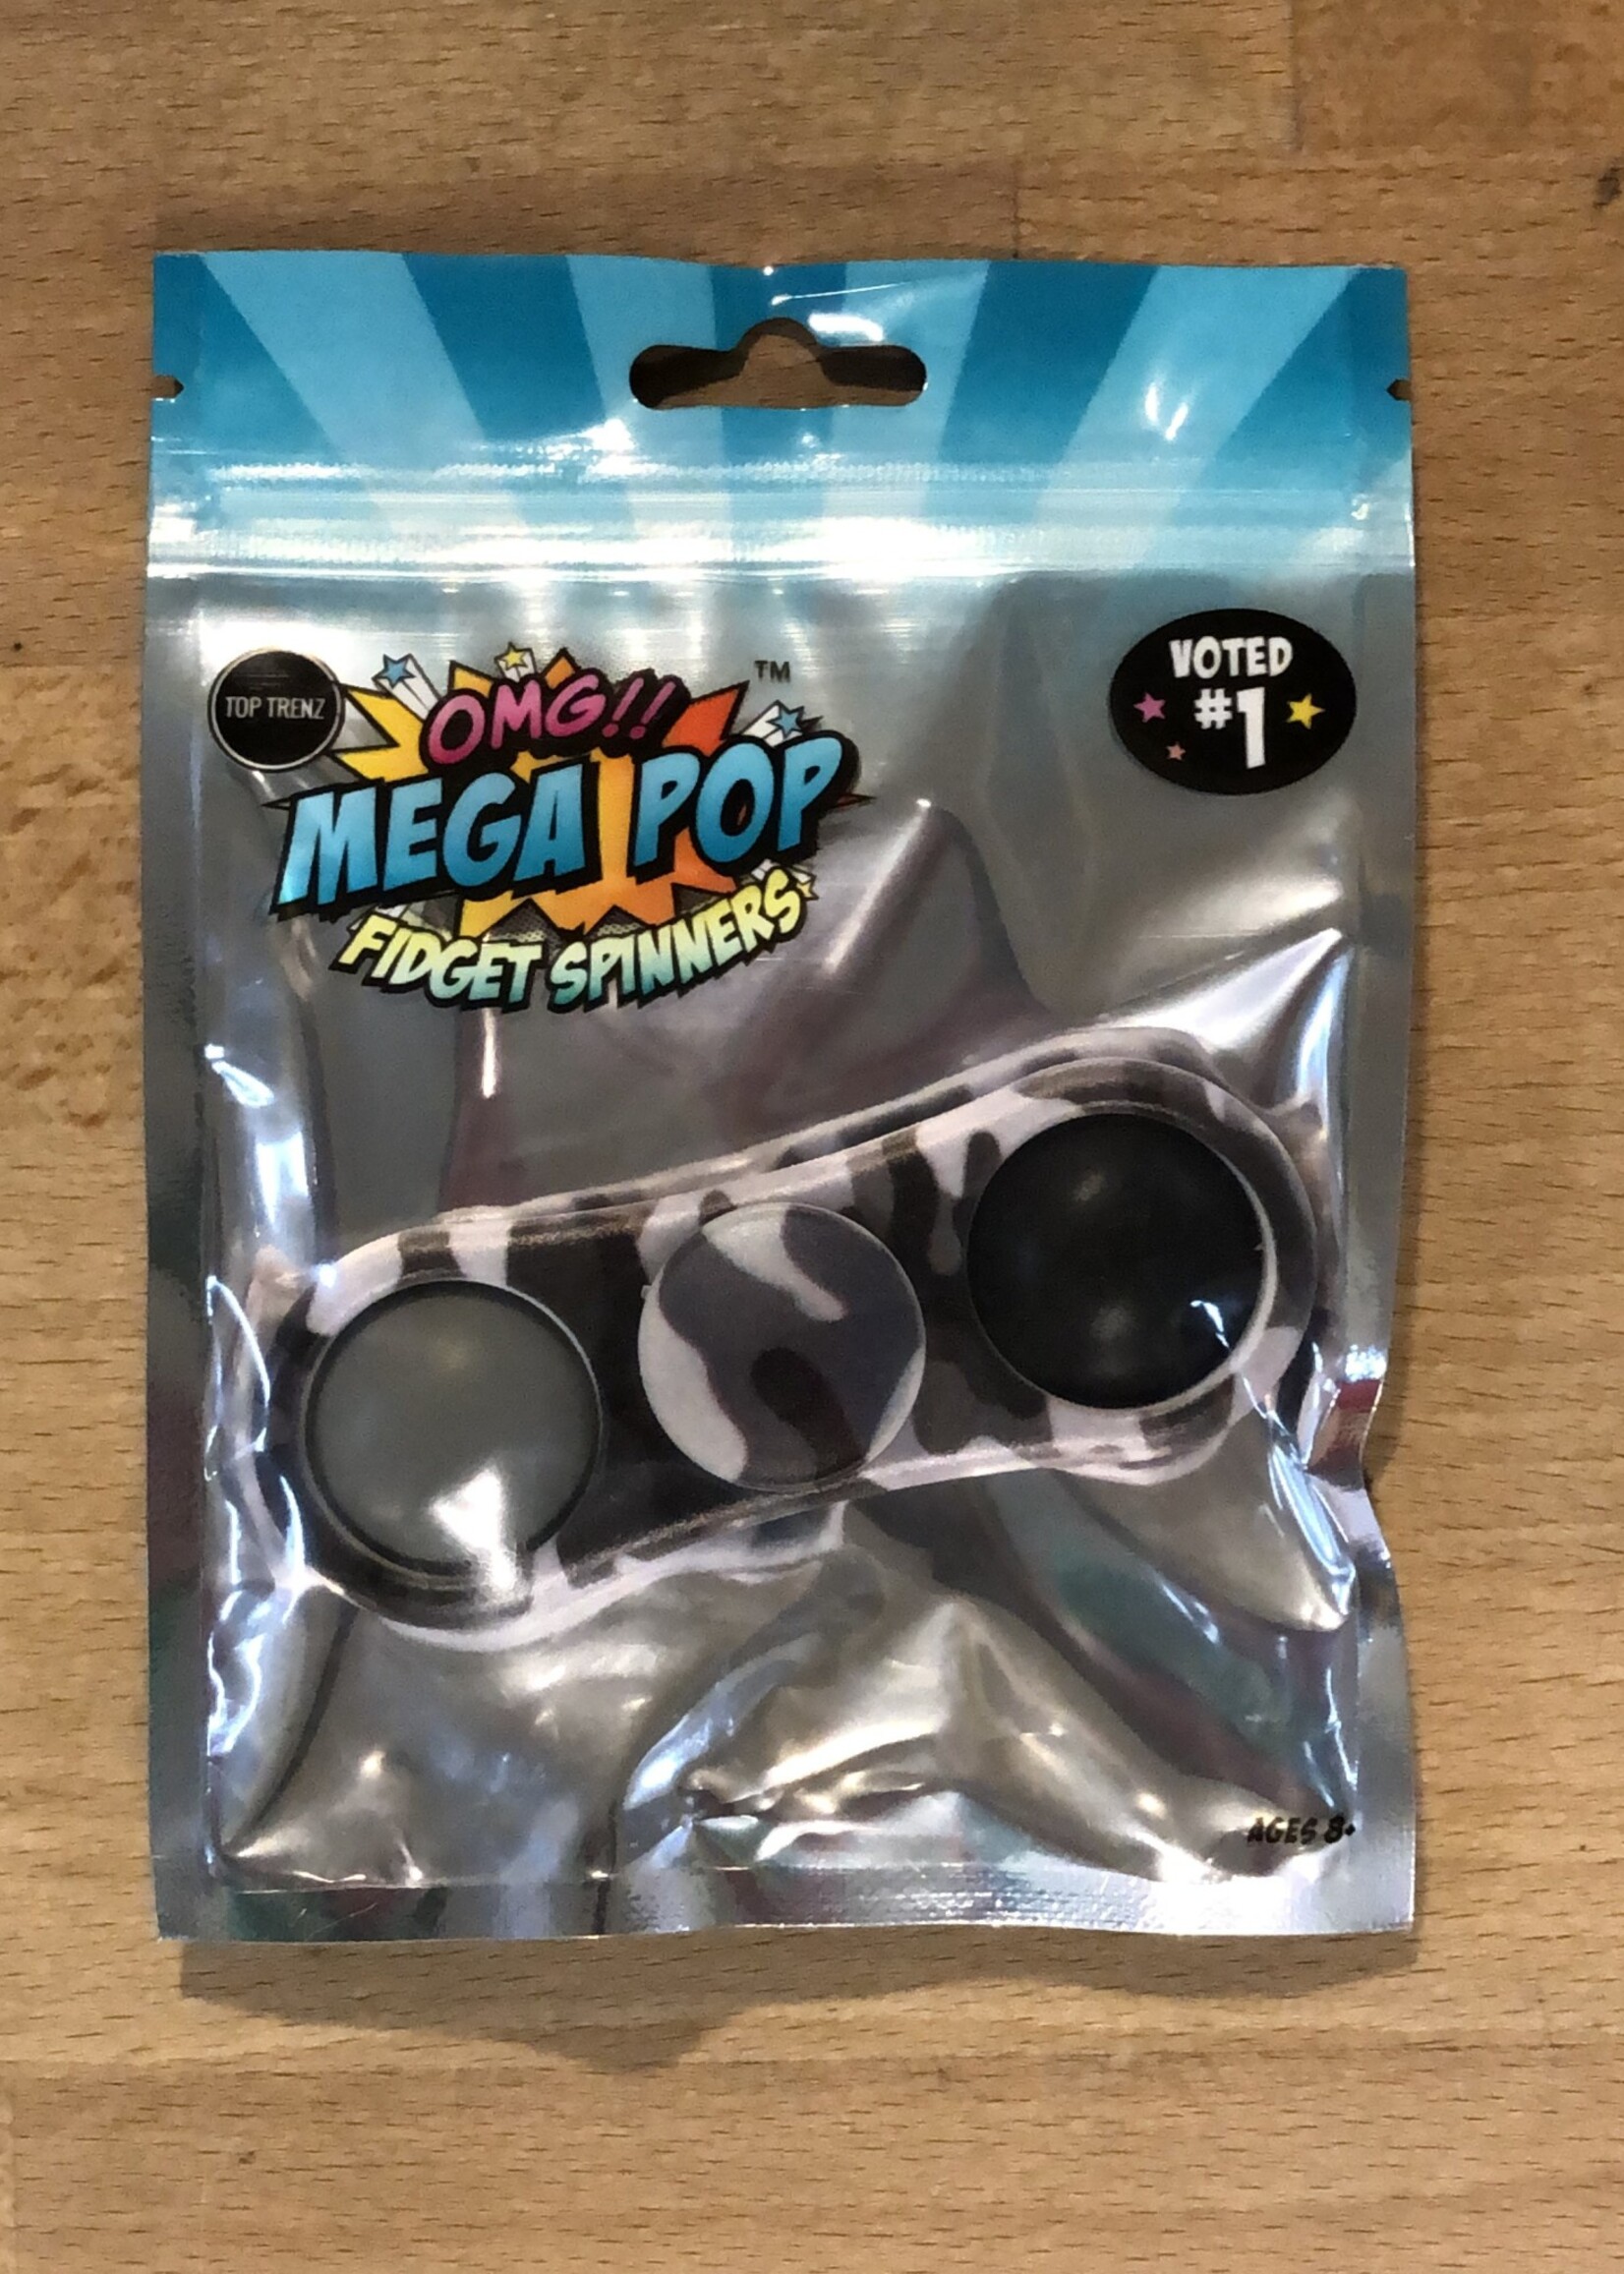 OMG! Mega Pop Fidget Spinner